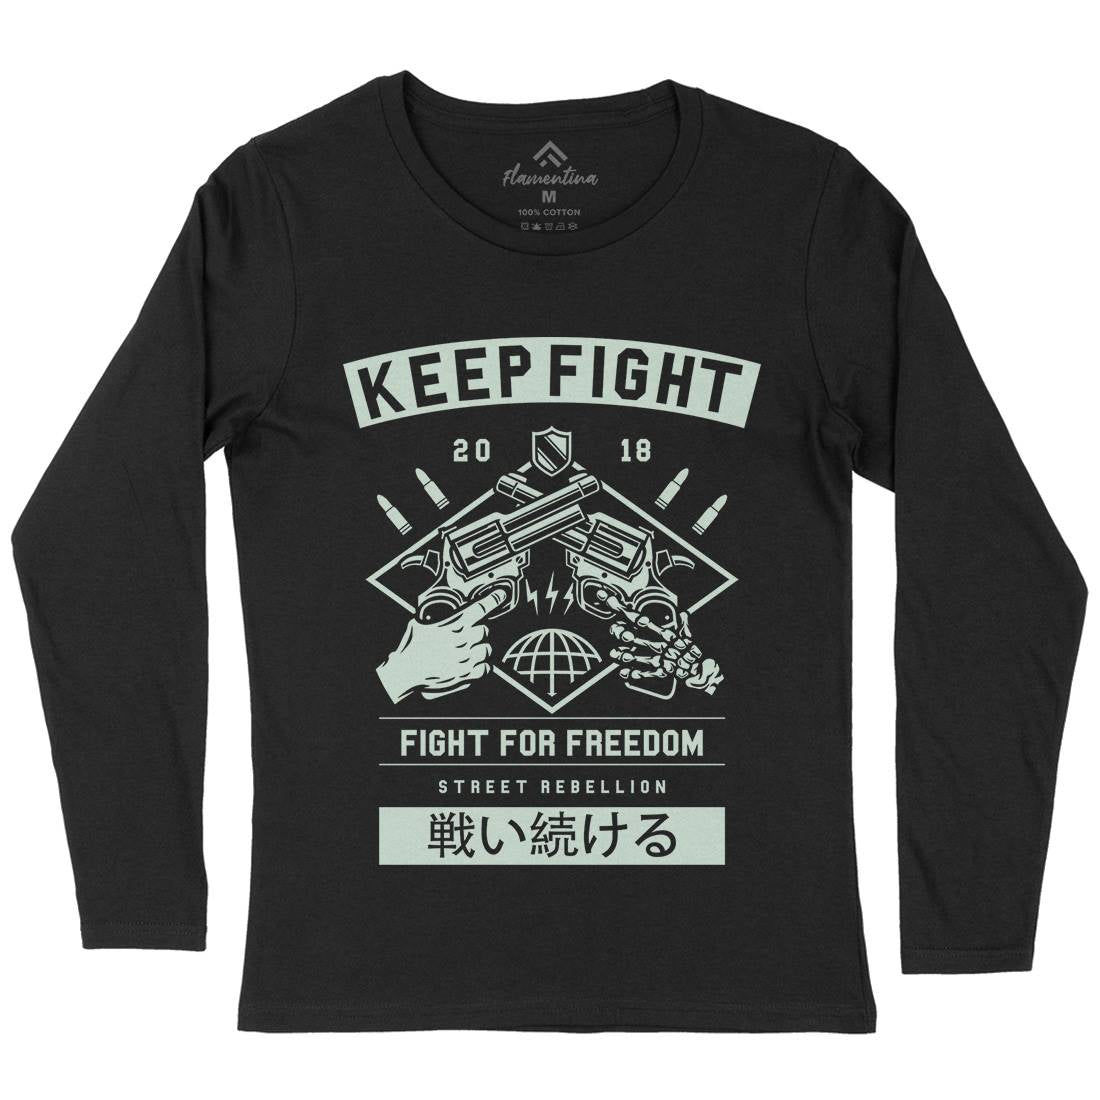 Keep Fight Womens Long Sleeve T-Shirt Illuminati A245